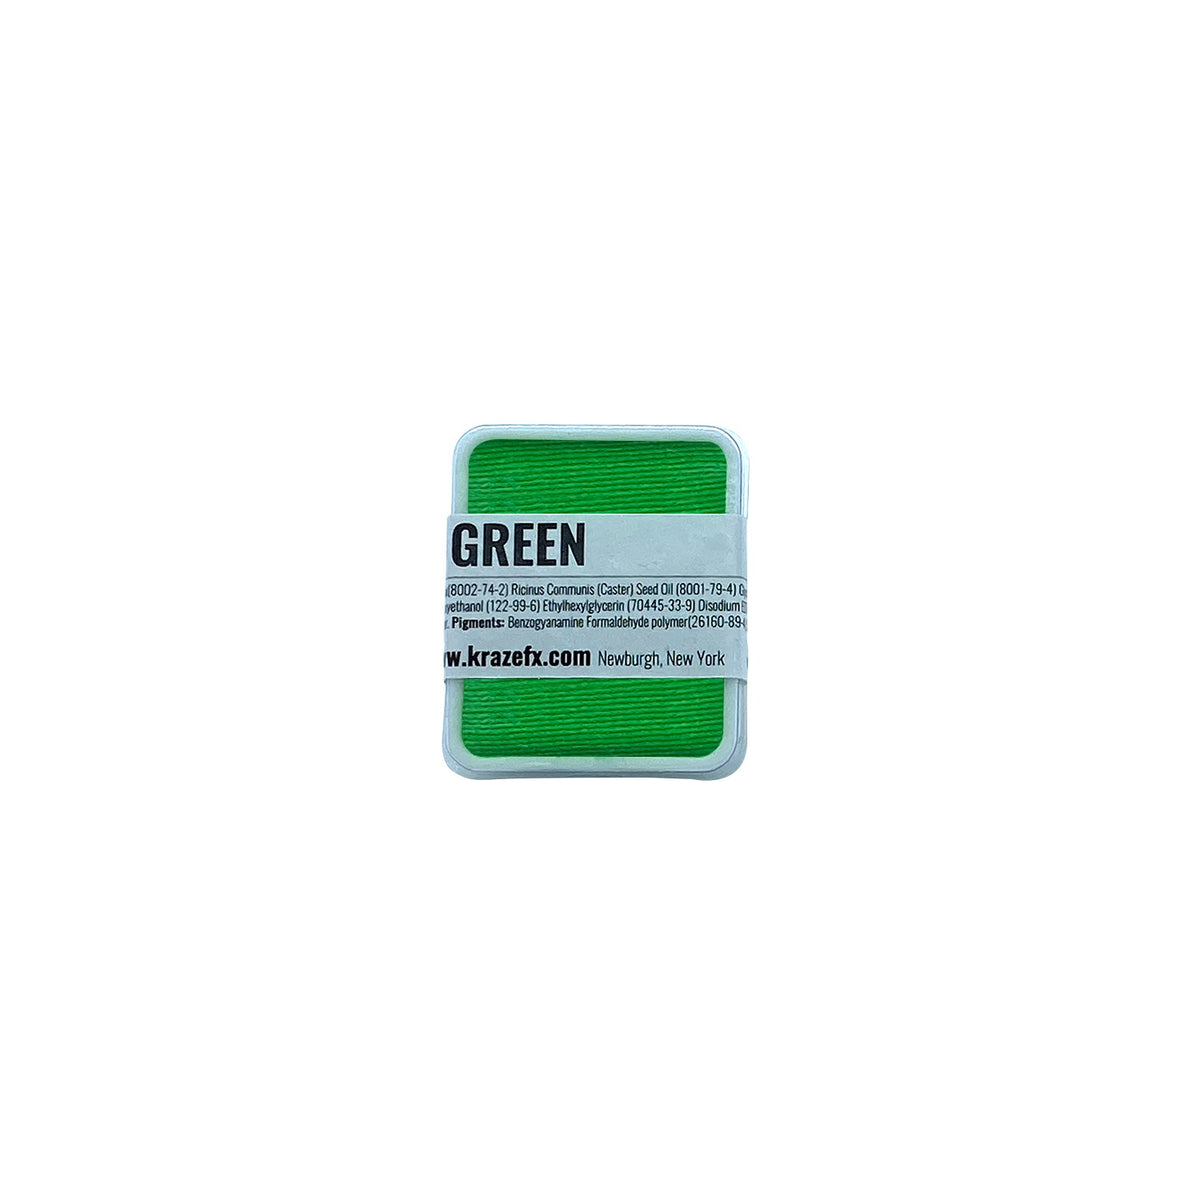 Kraze FX Face Paint Palette Refill - Neon Green (0.21 oz/6 gm)